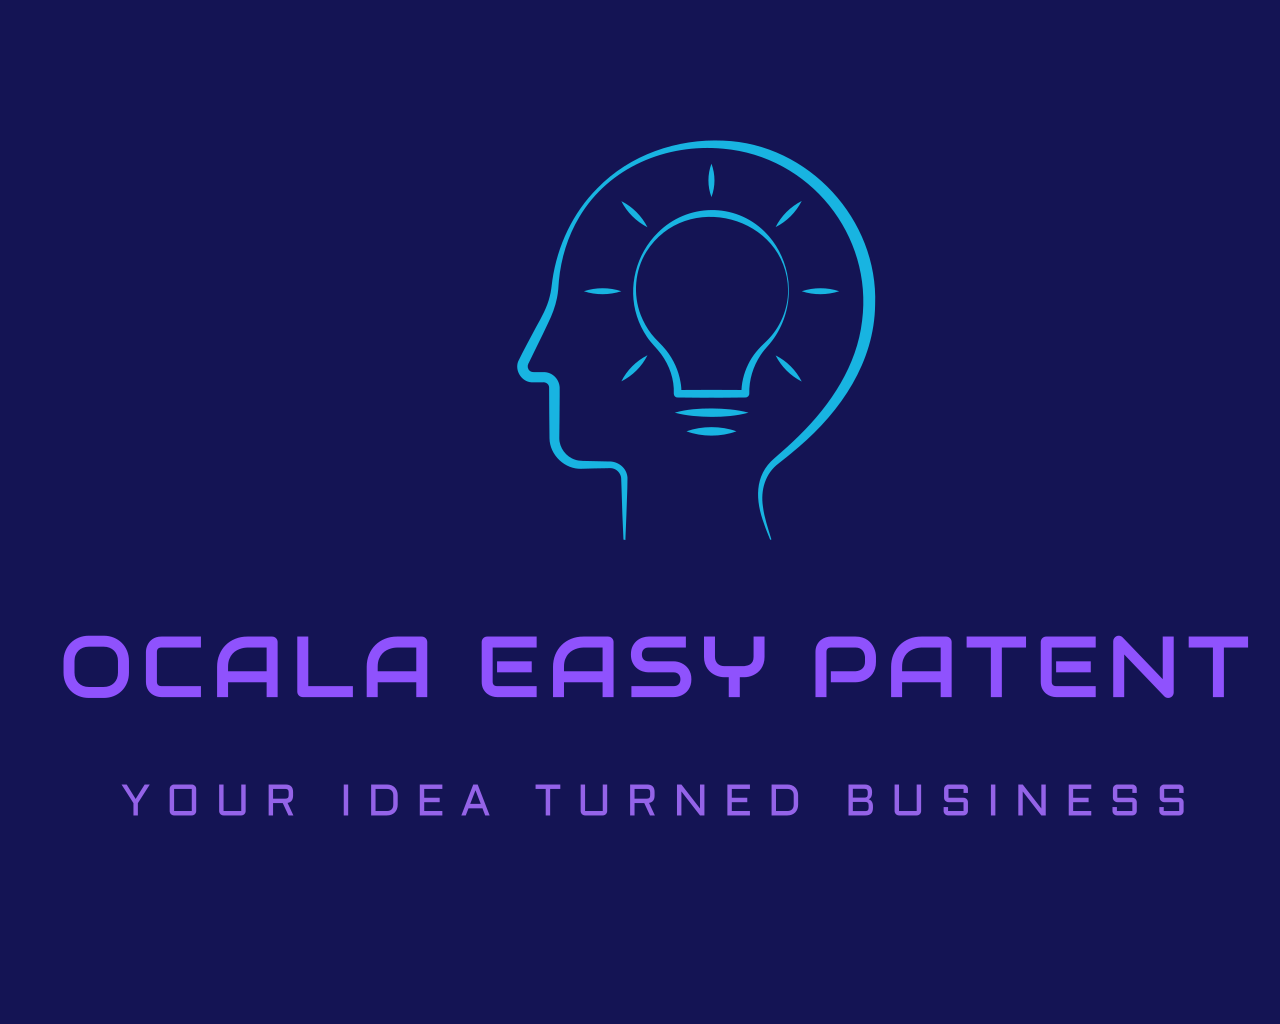 Ocala Easy Patent logo